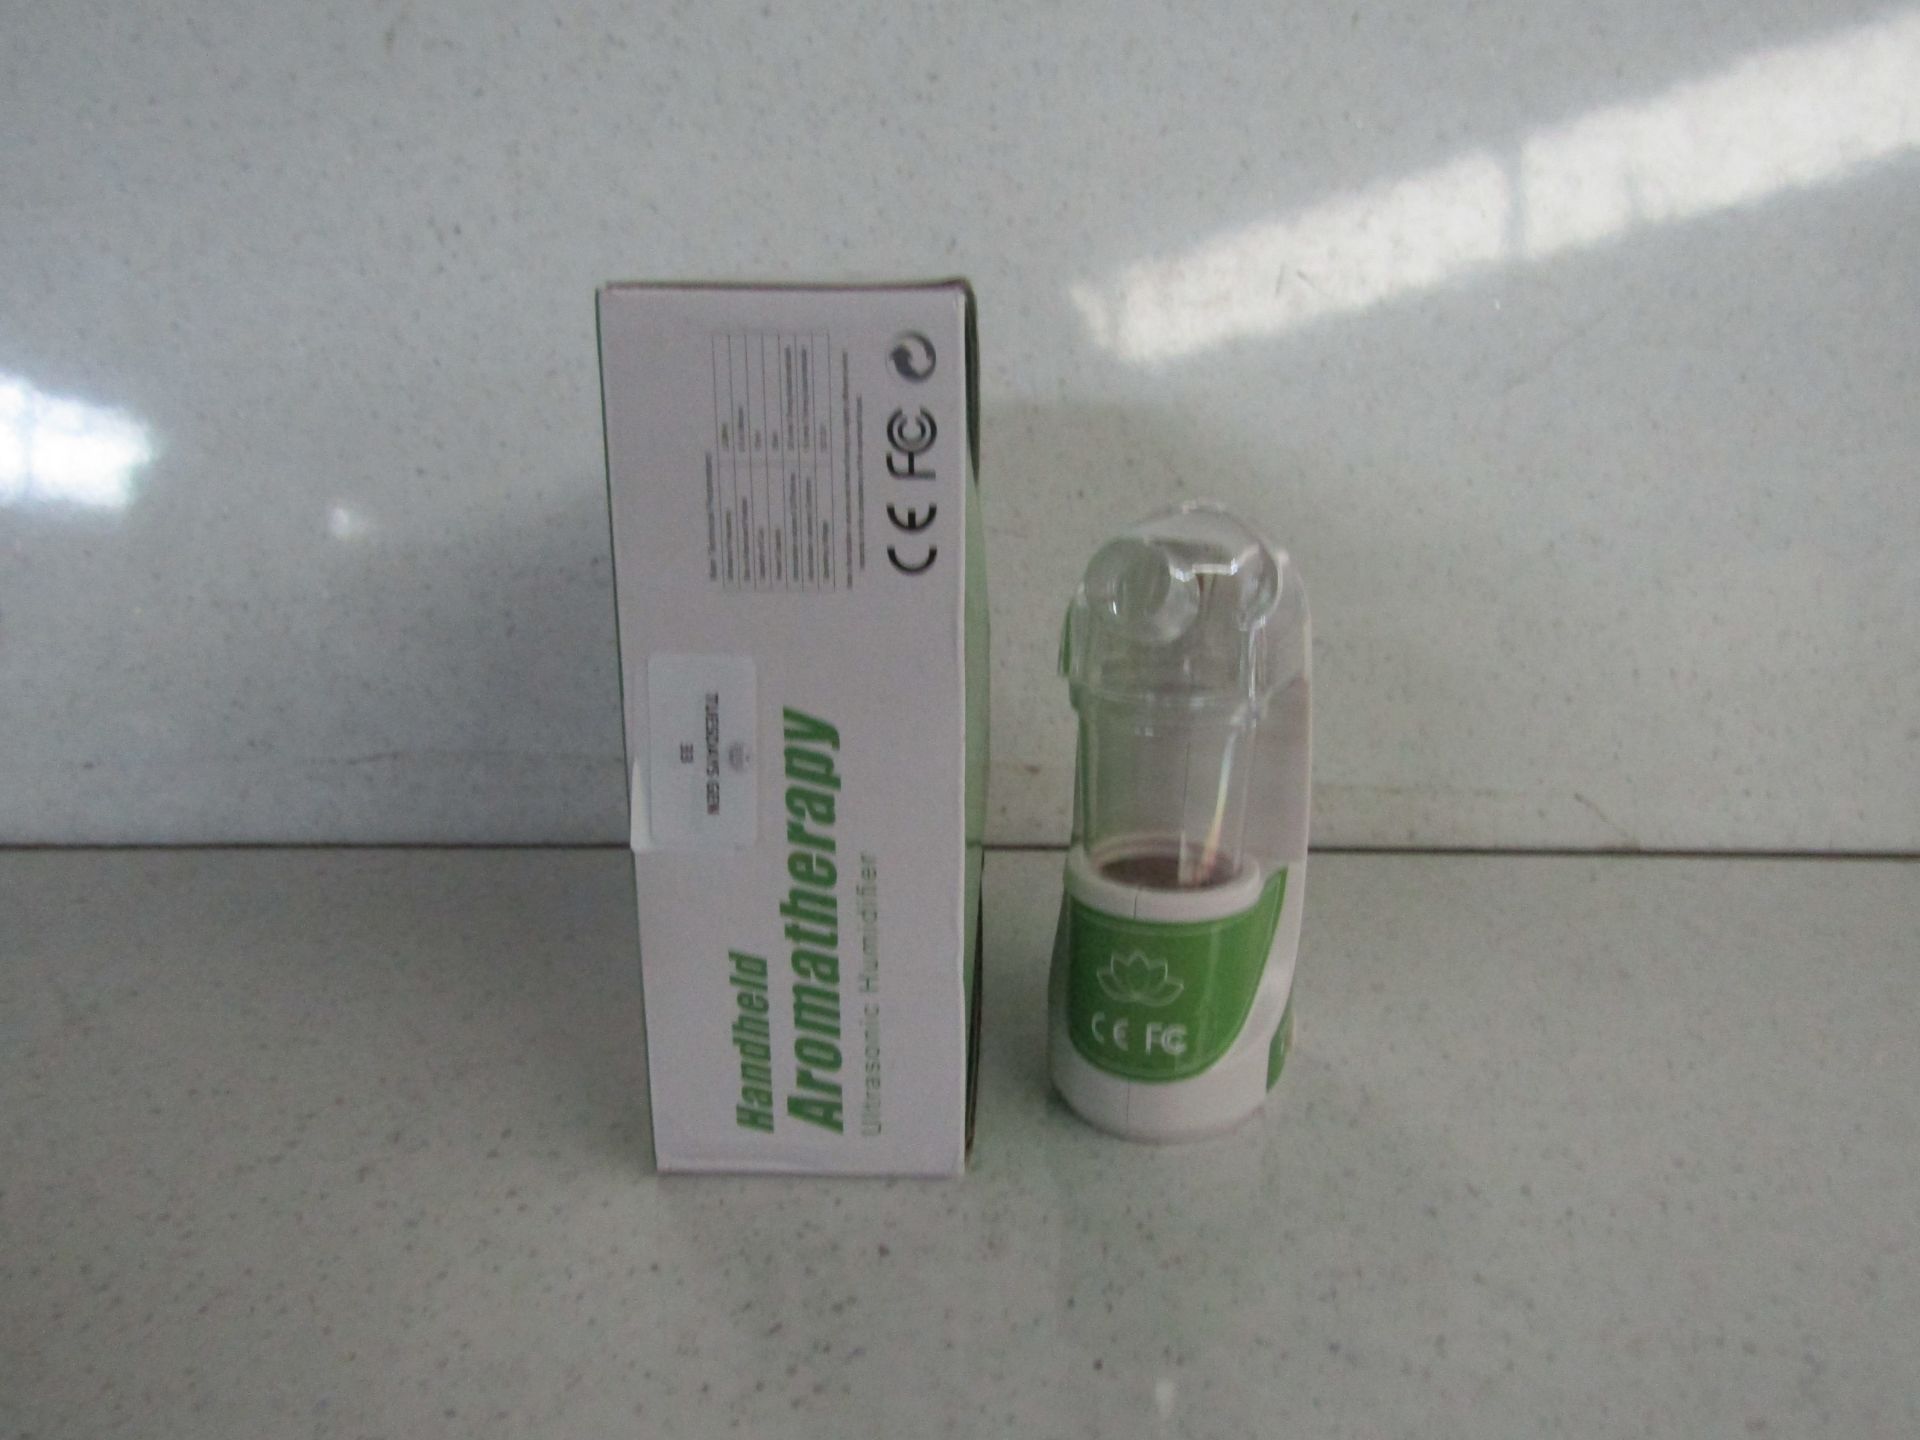 Handheld Aromatherapy Ultrasonic Dehumidifier - Unchecked & Boxed. - Image 3 of 6